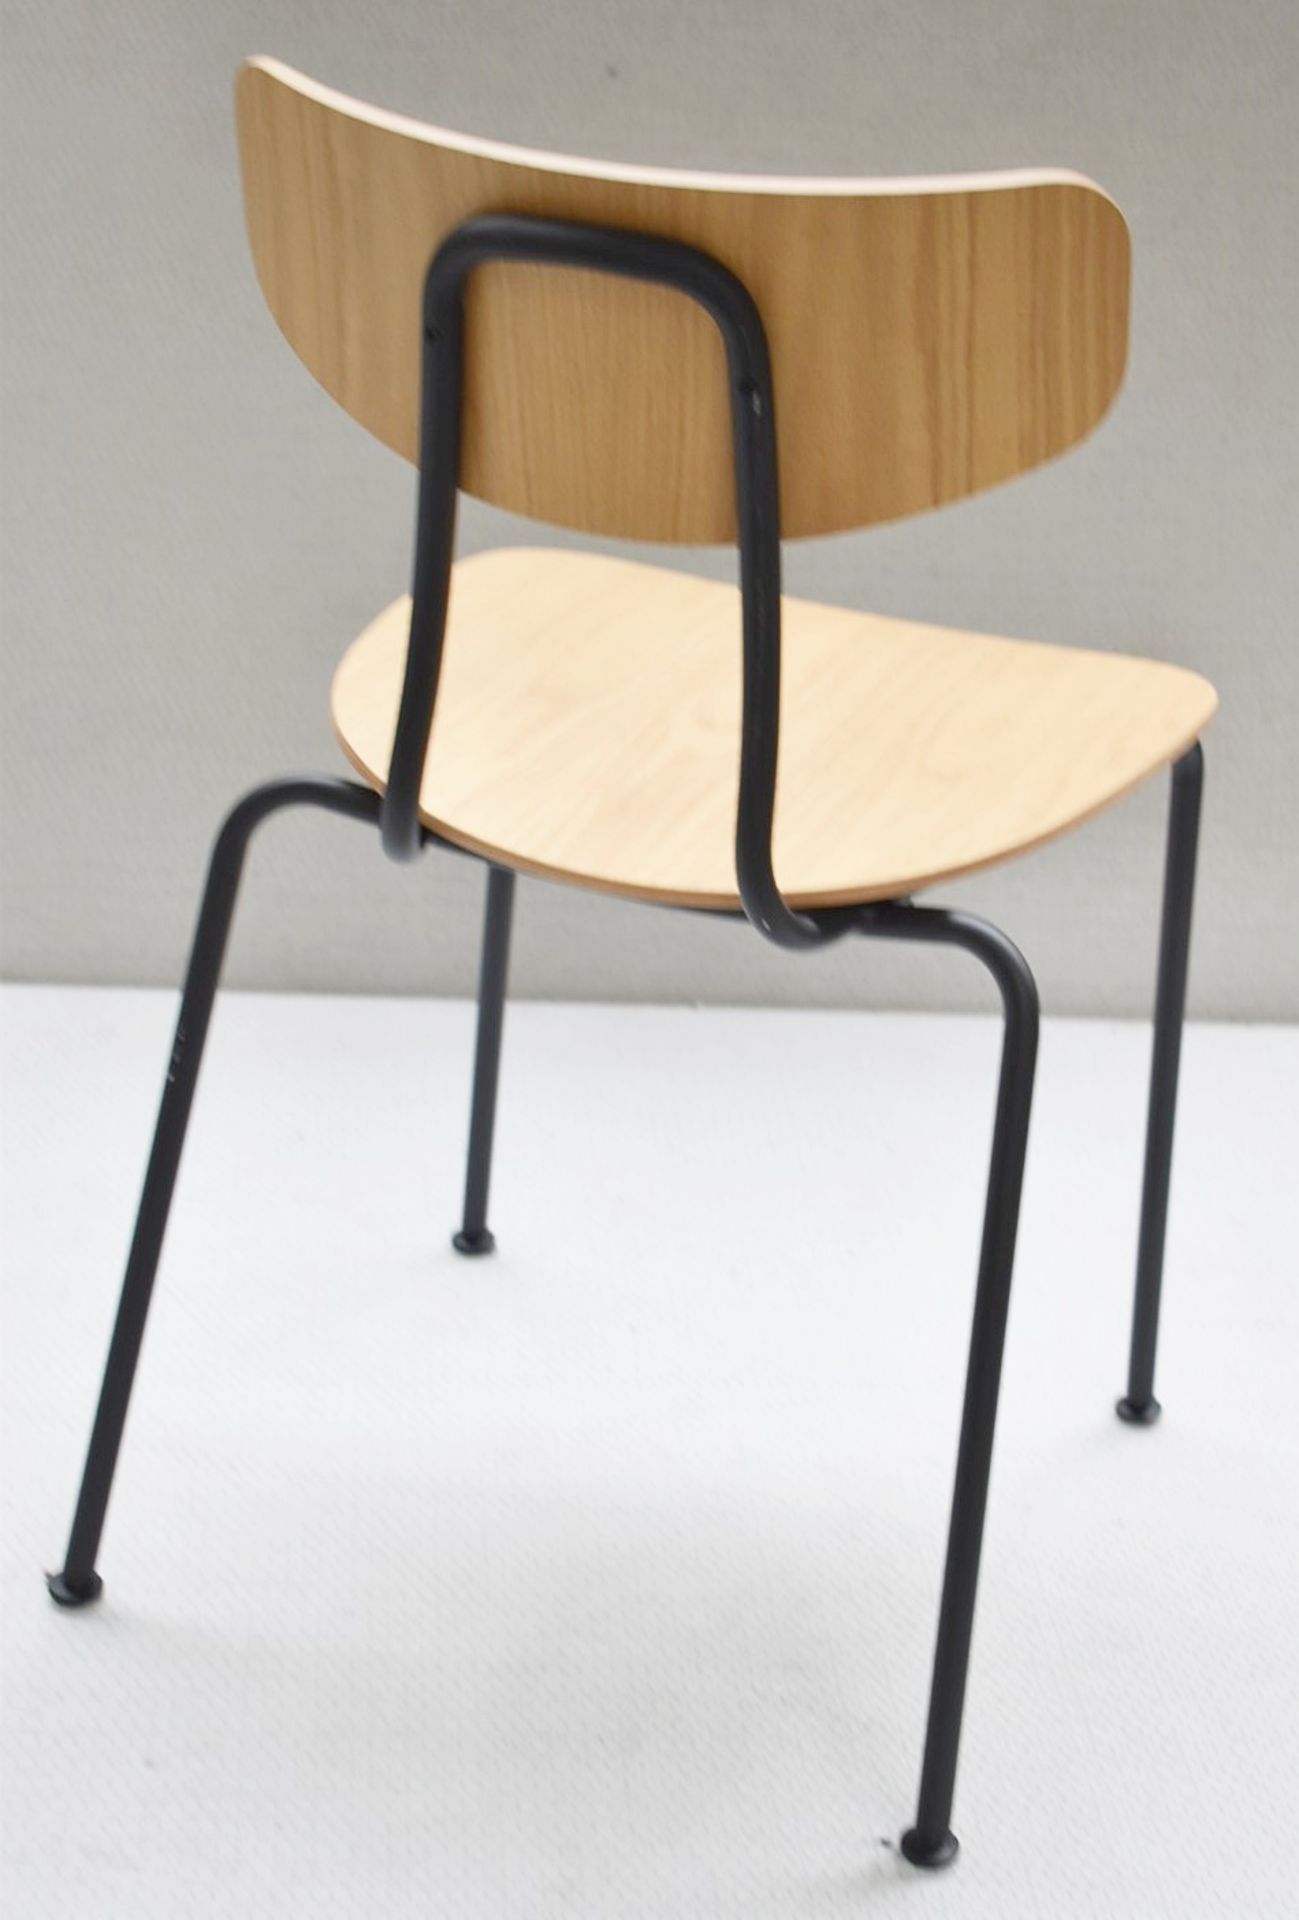 1 x VITRA 'Moca' Designer Chair with an Oak Seat & Backrest - Original Price £389.00 - Image 2 of 4